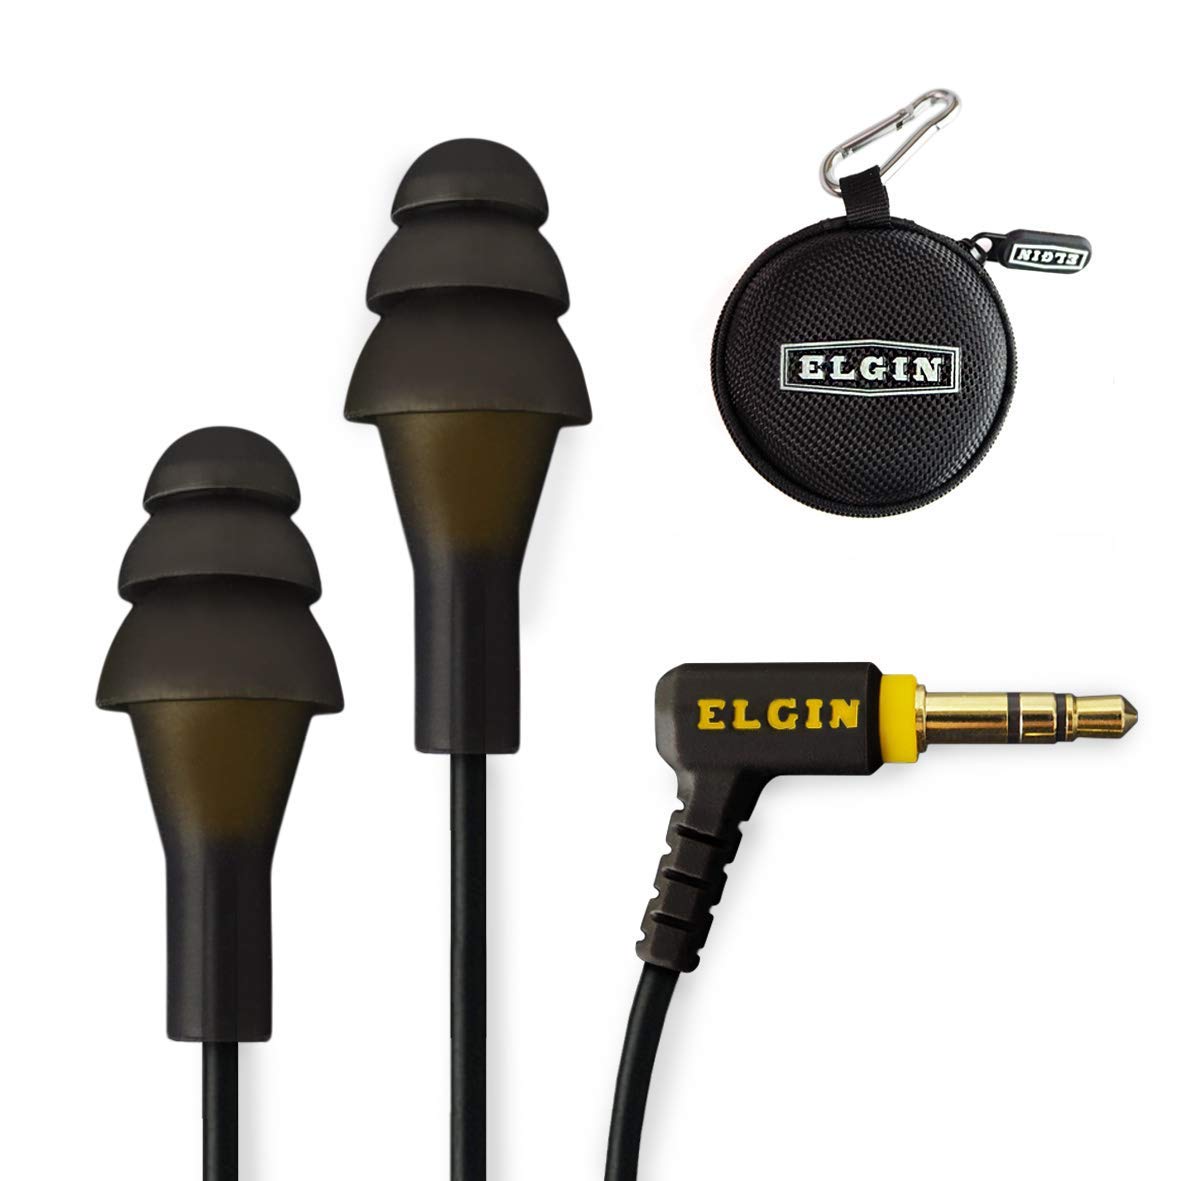 Elgin Ruckus Earplug Earbuds | OSHA Compliant Noise Reduction in-Ear Headphones : Isolating Ear Plug Earphones